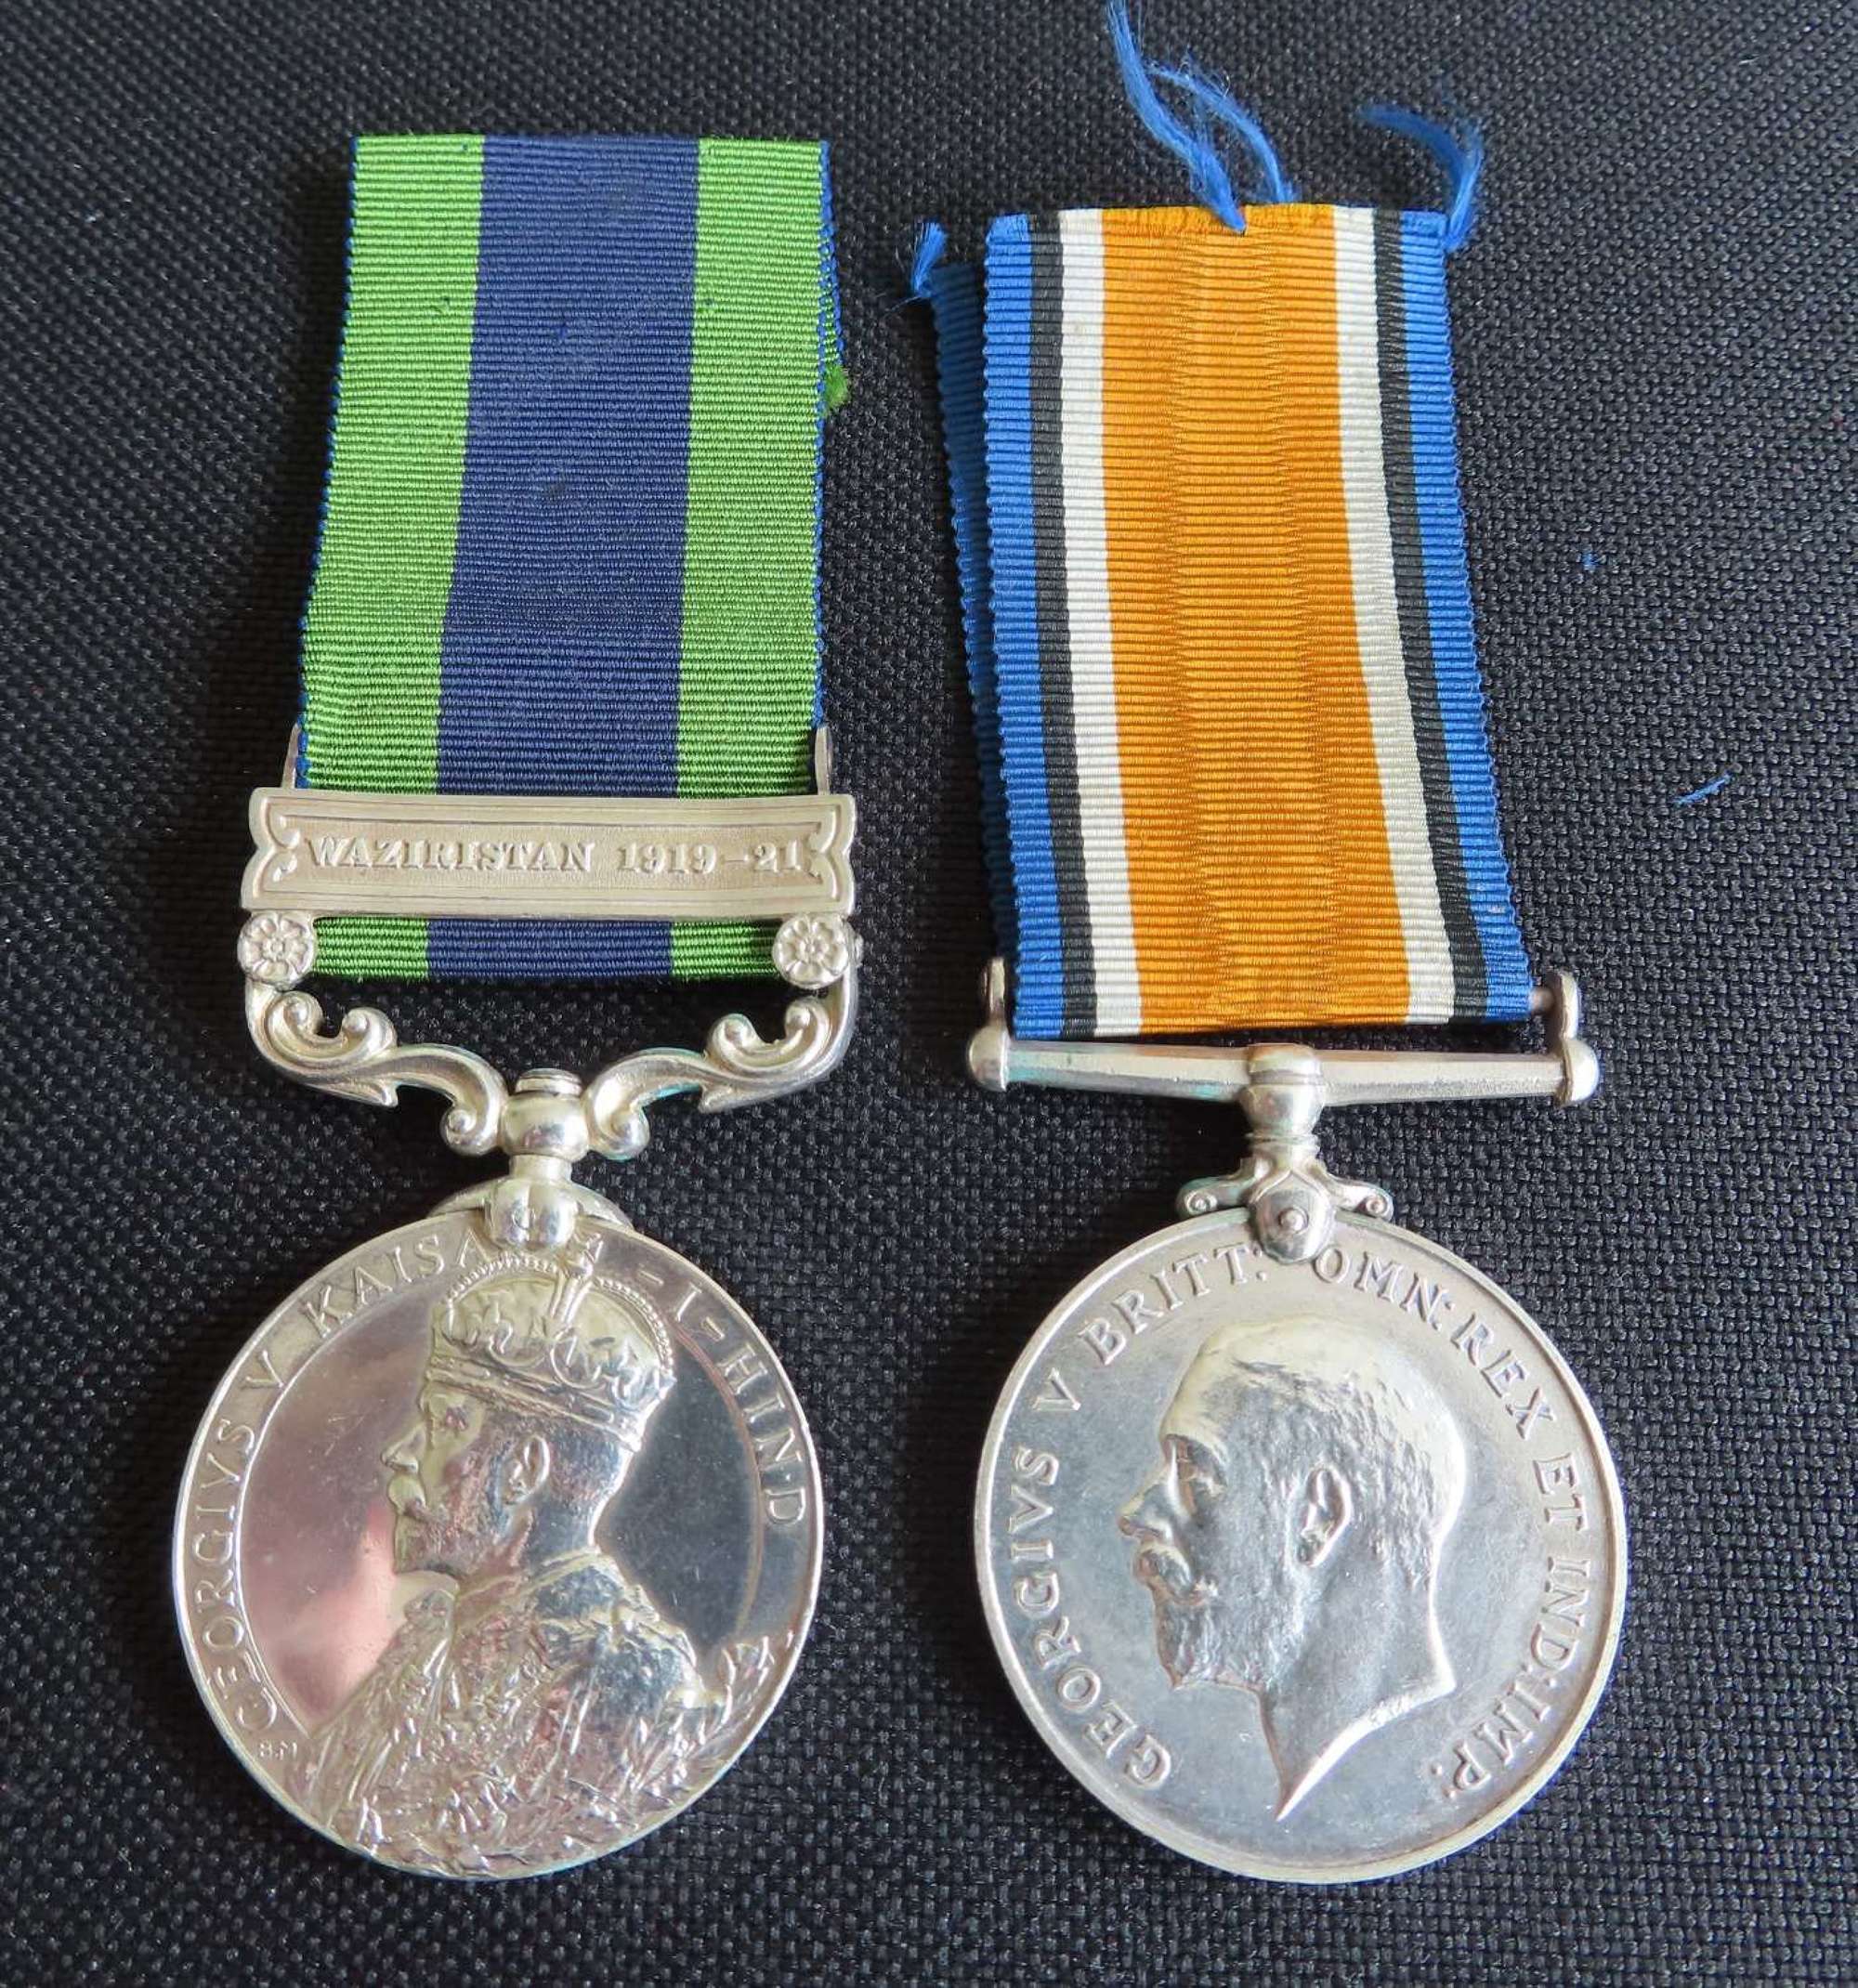 WW1 British war medal and Waziristan 1919-21 IGS to Lieut Fitzpatrick